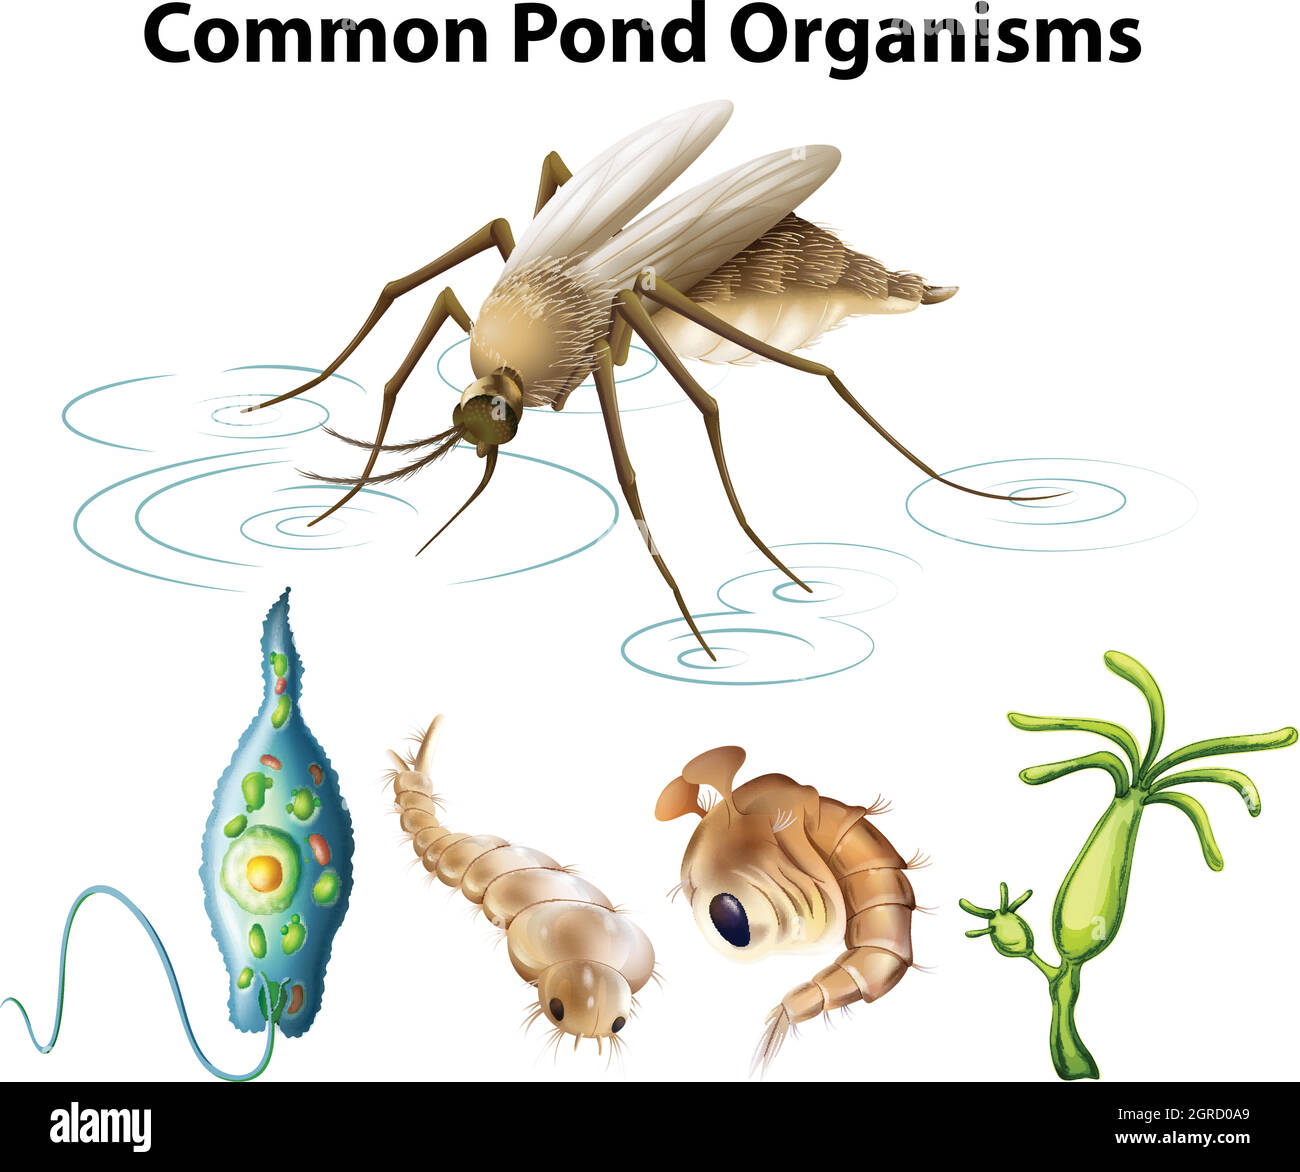 Common pond organisms diagram Stock Vector